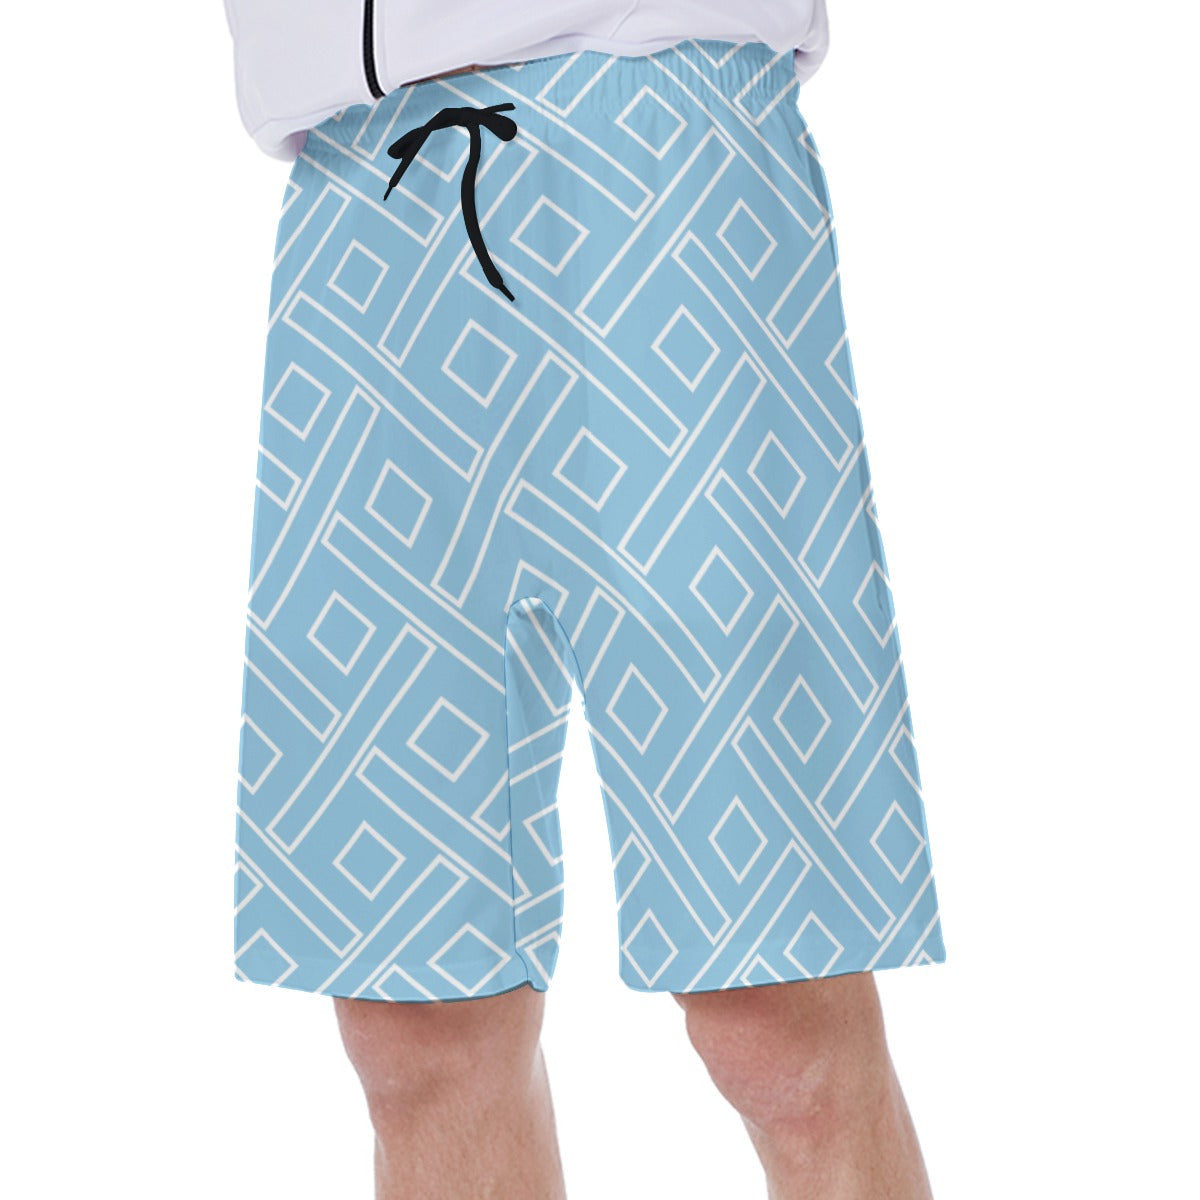 All-Over Print Men's Beach Shorts